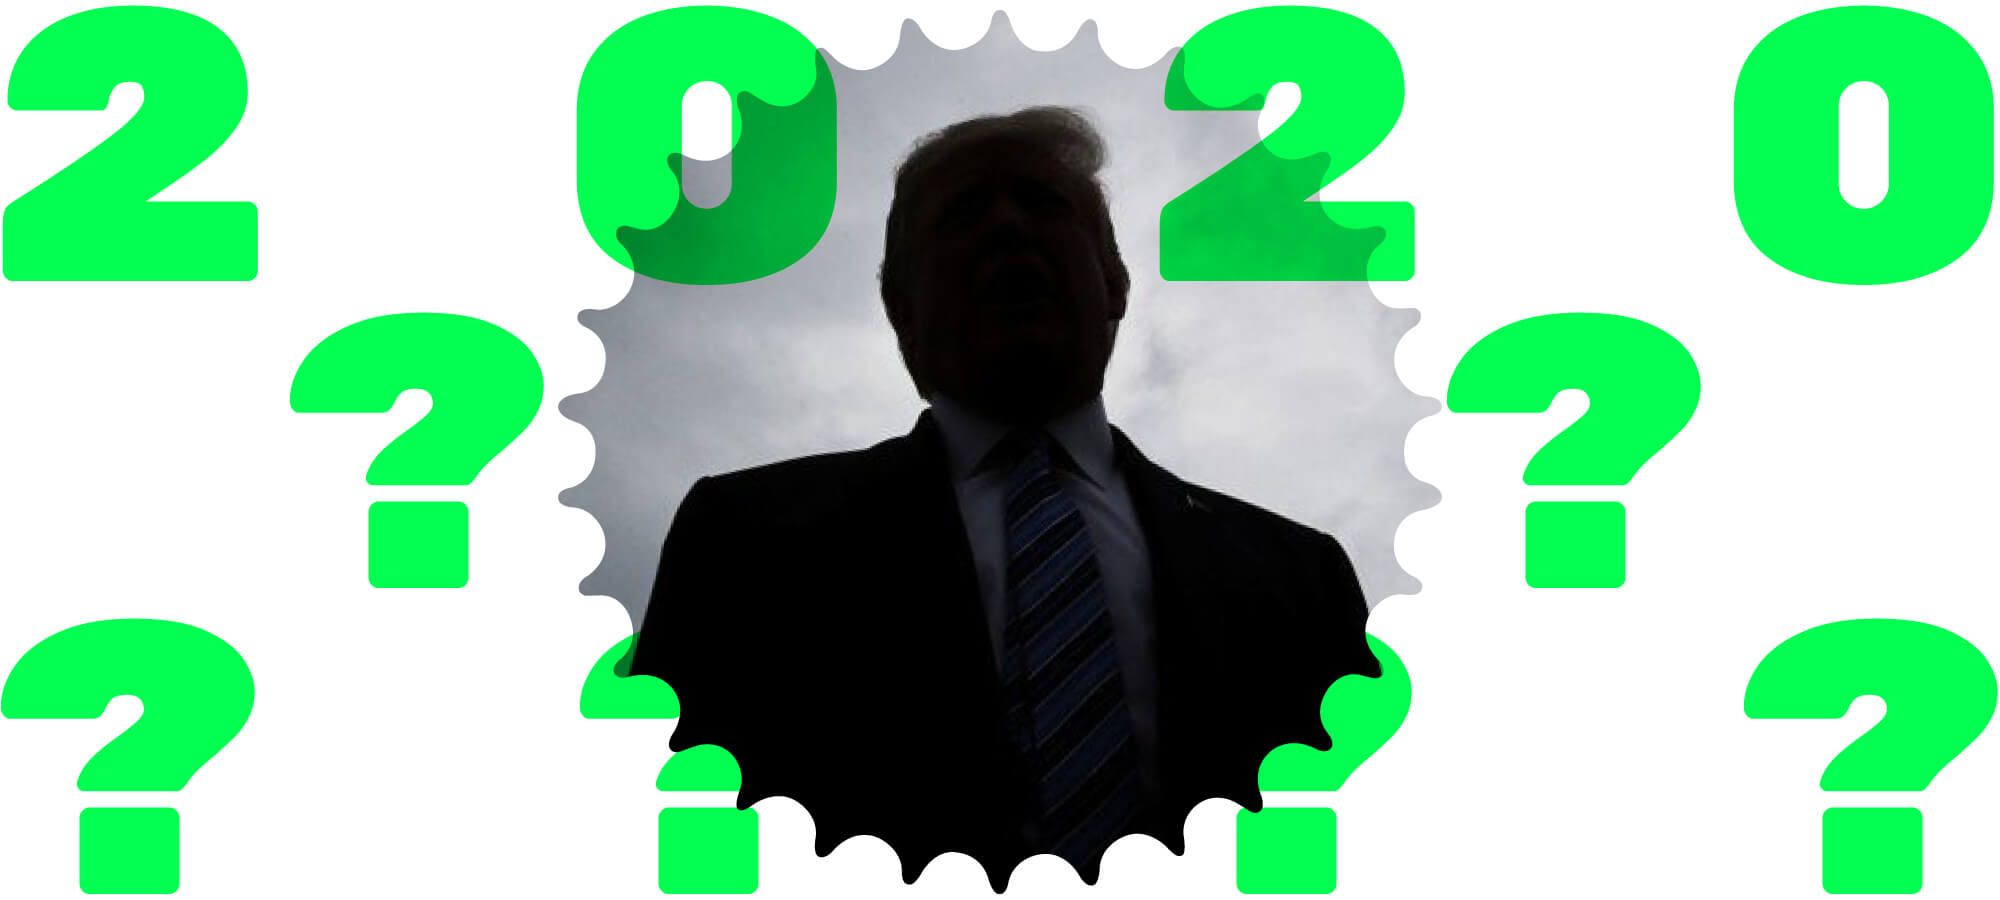 Illustration Trump 2020 question marks